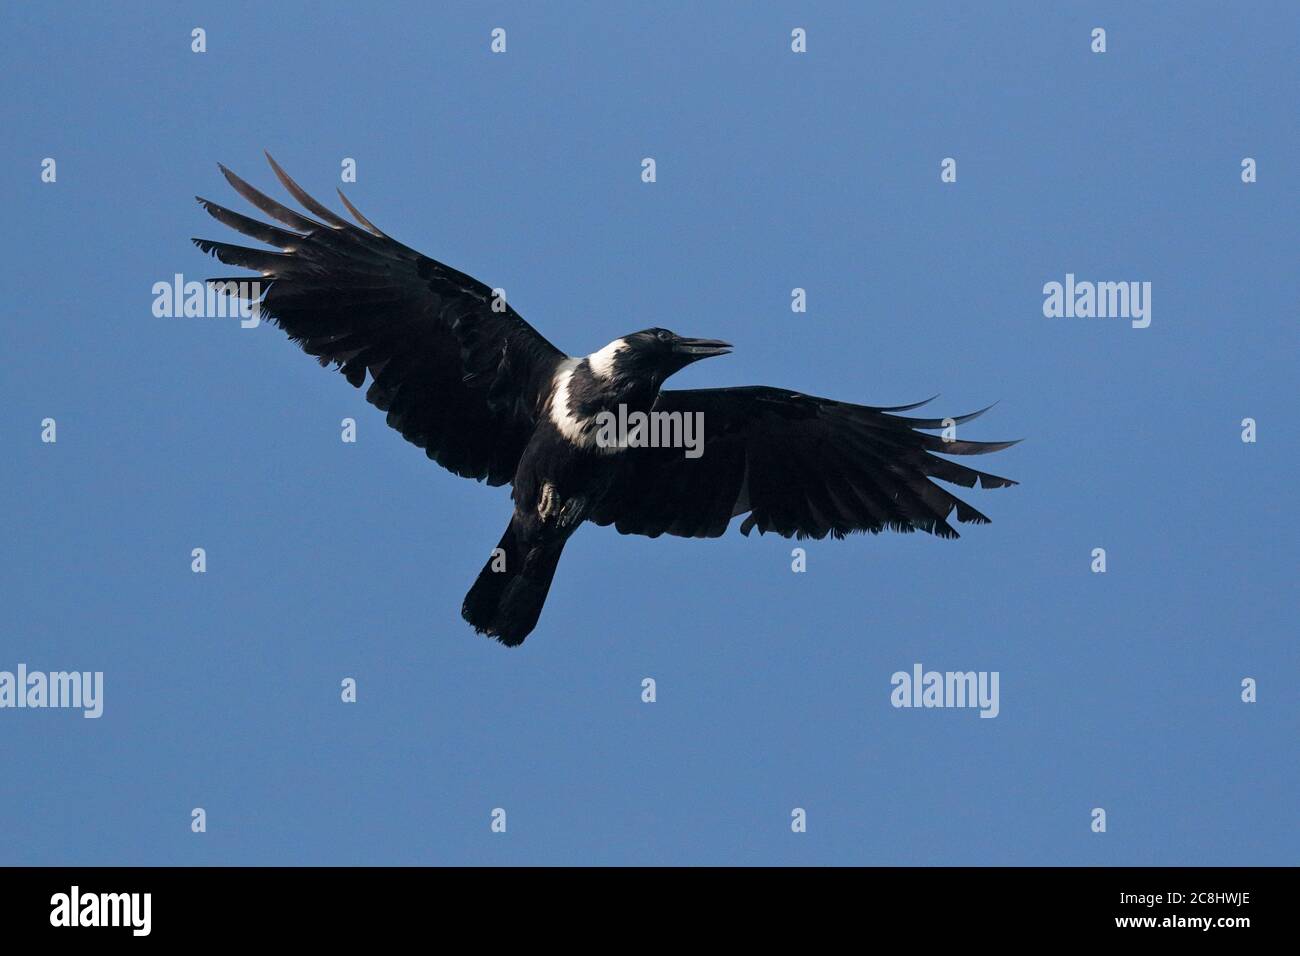 Collared Crow (Corvus torquatus) adult in flight with blue sky back ground, Nam Sang Wai fishponds, Deep Bay, Hong Kong, China 17th November 2019 Stock Photo